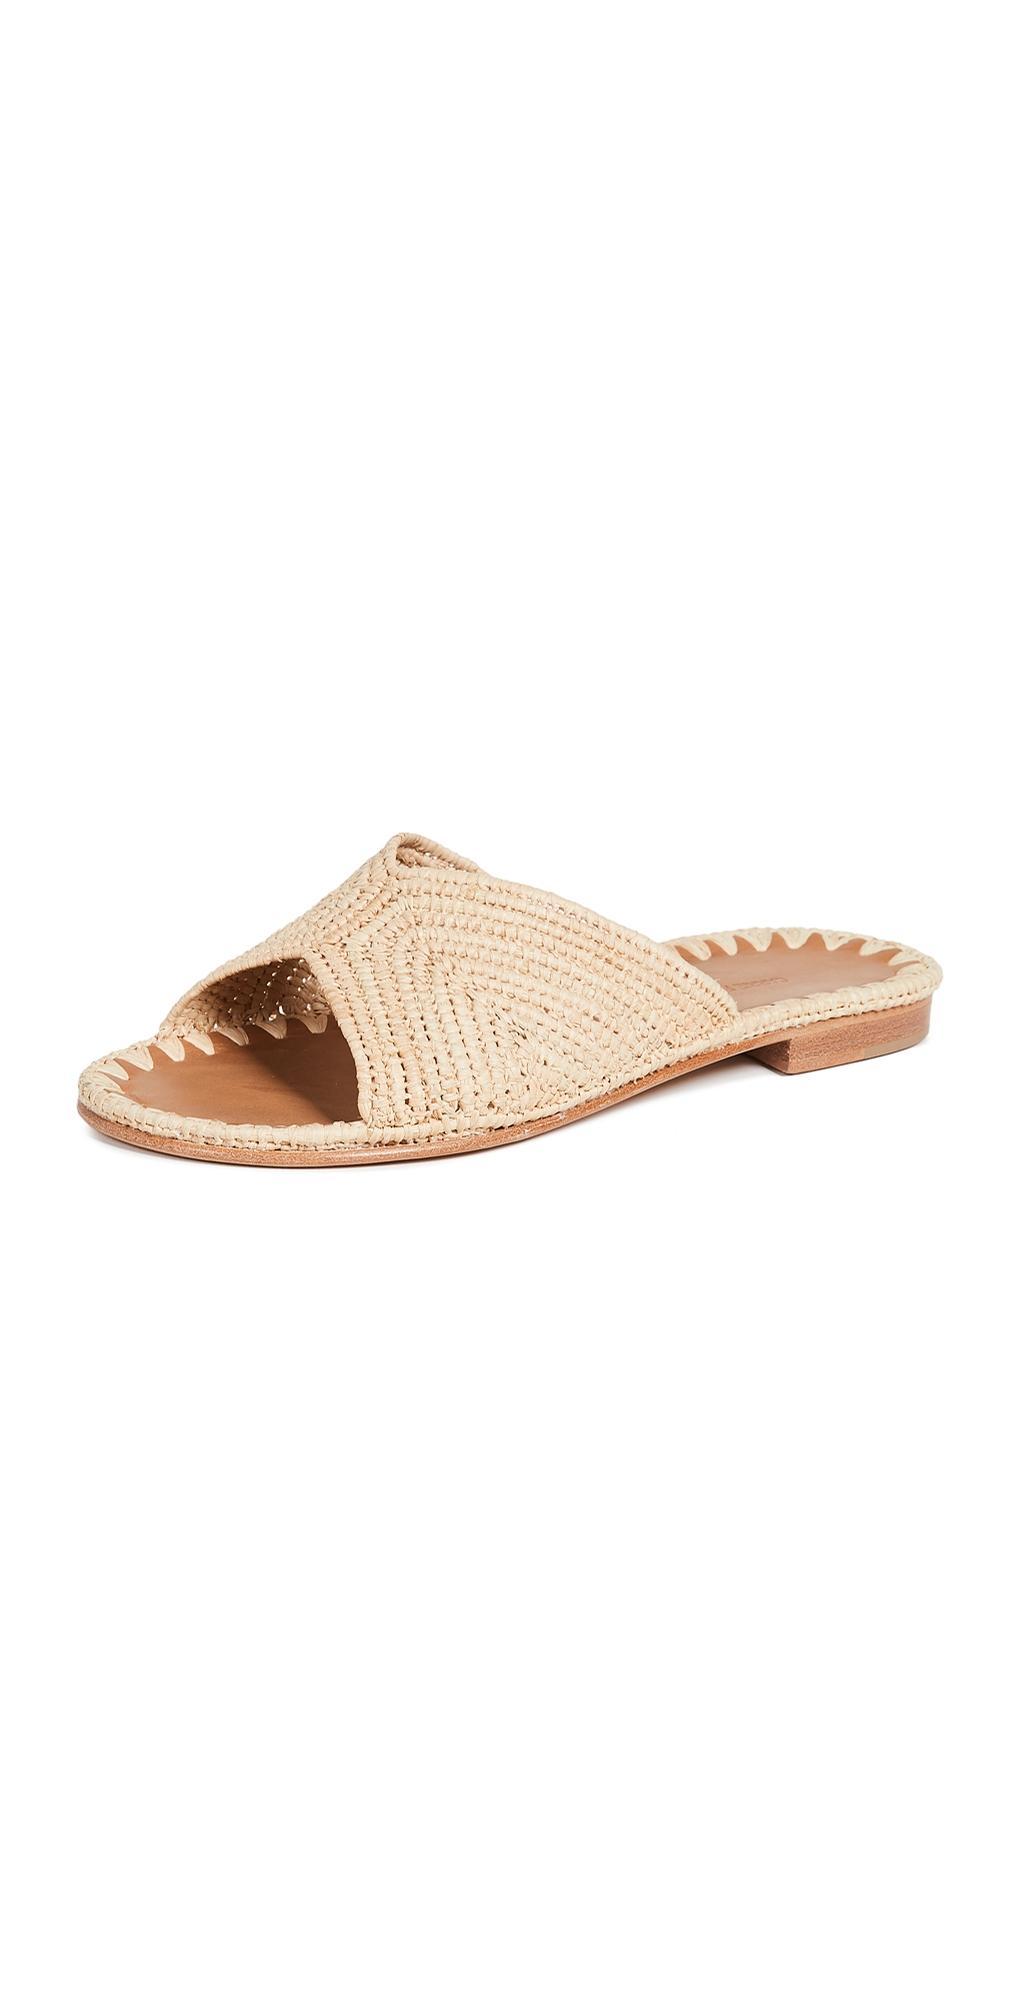 Woven Raffia Flat Slide Sandals Product Image